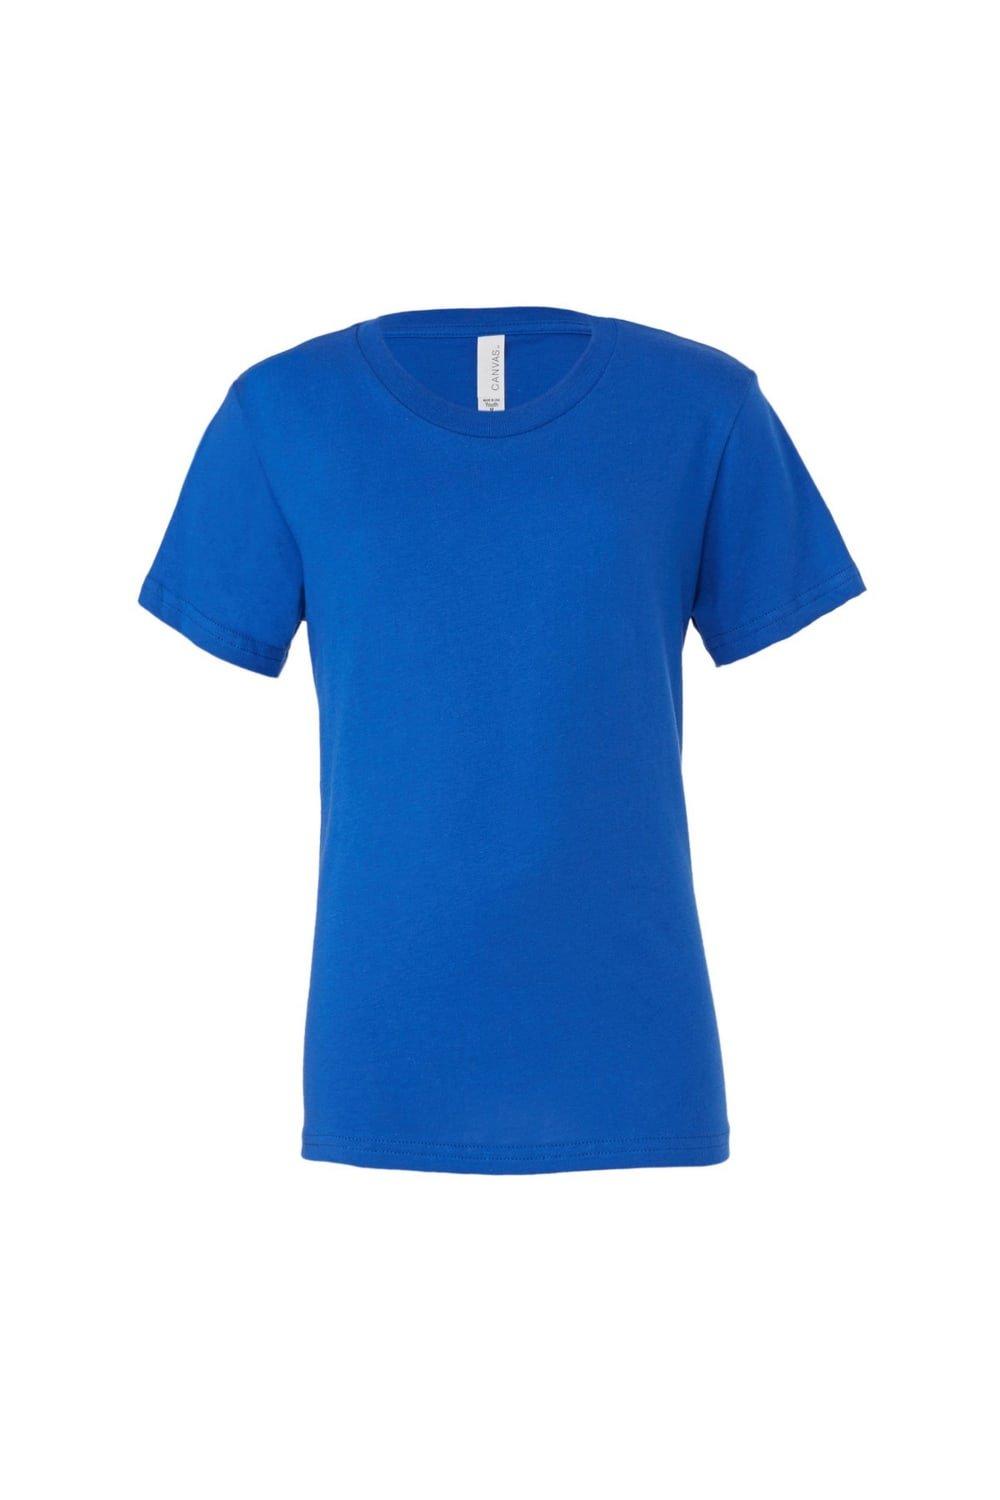 Молодежная футболка из джерси с короткими рукавами Bella + Canvas, синий